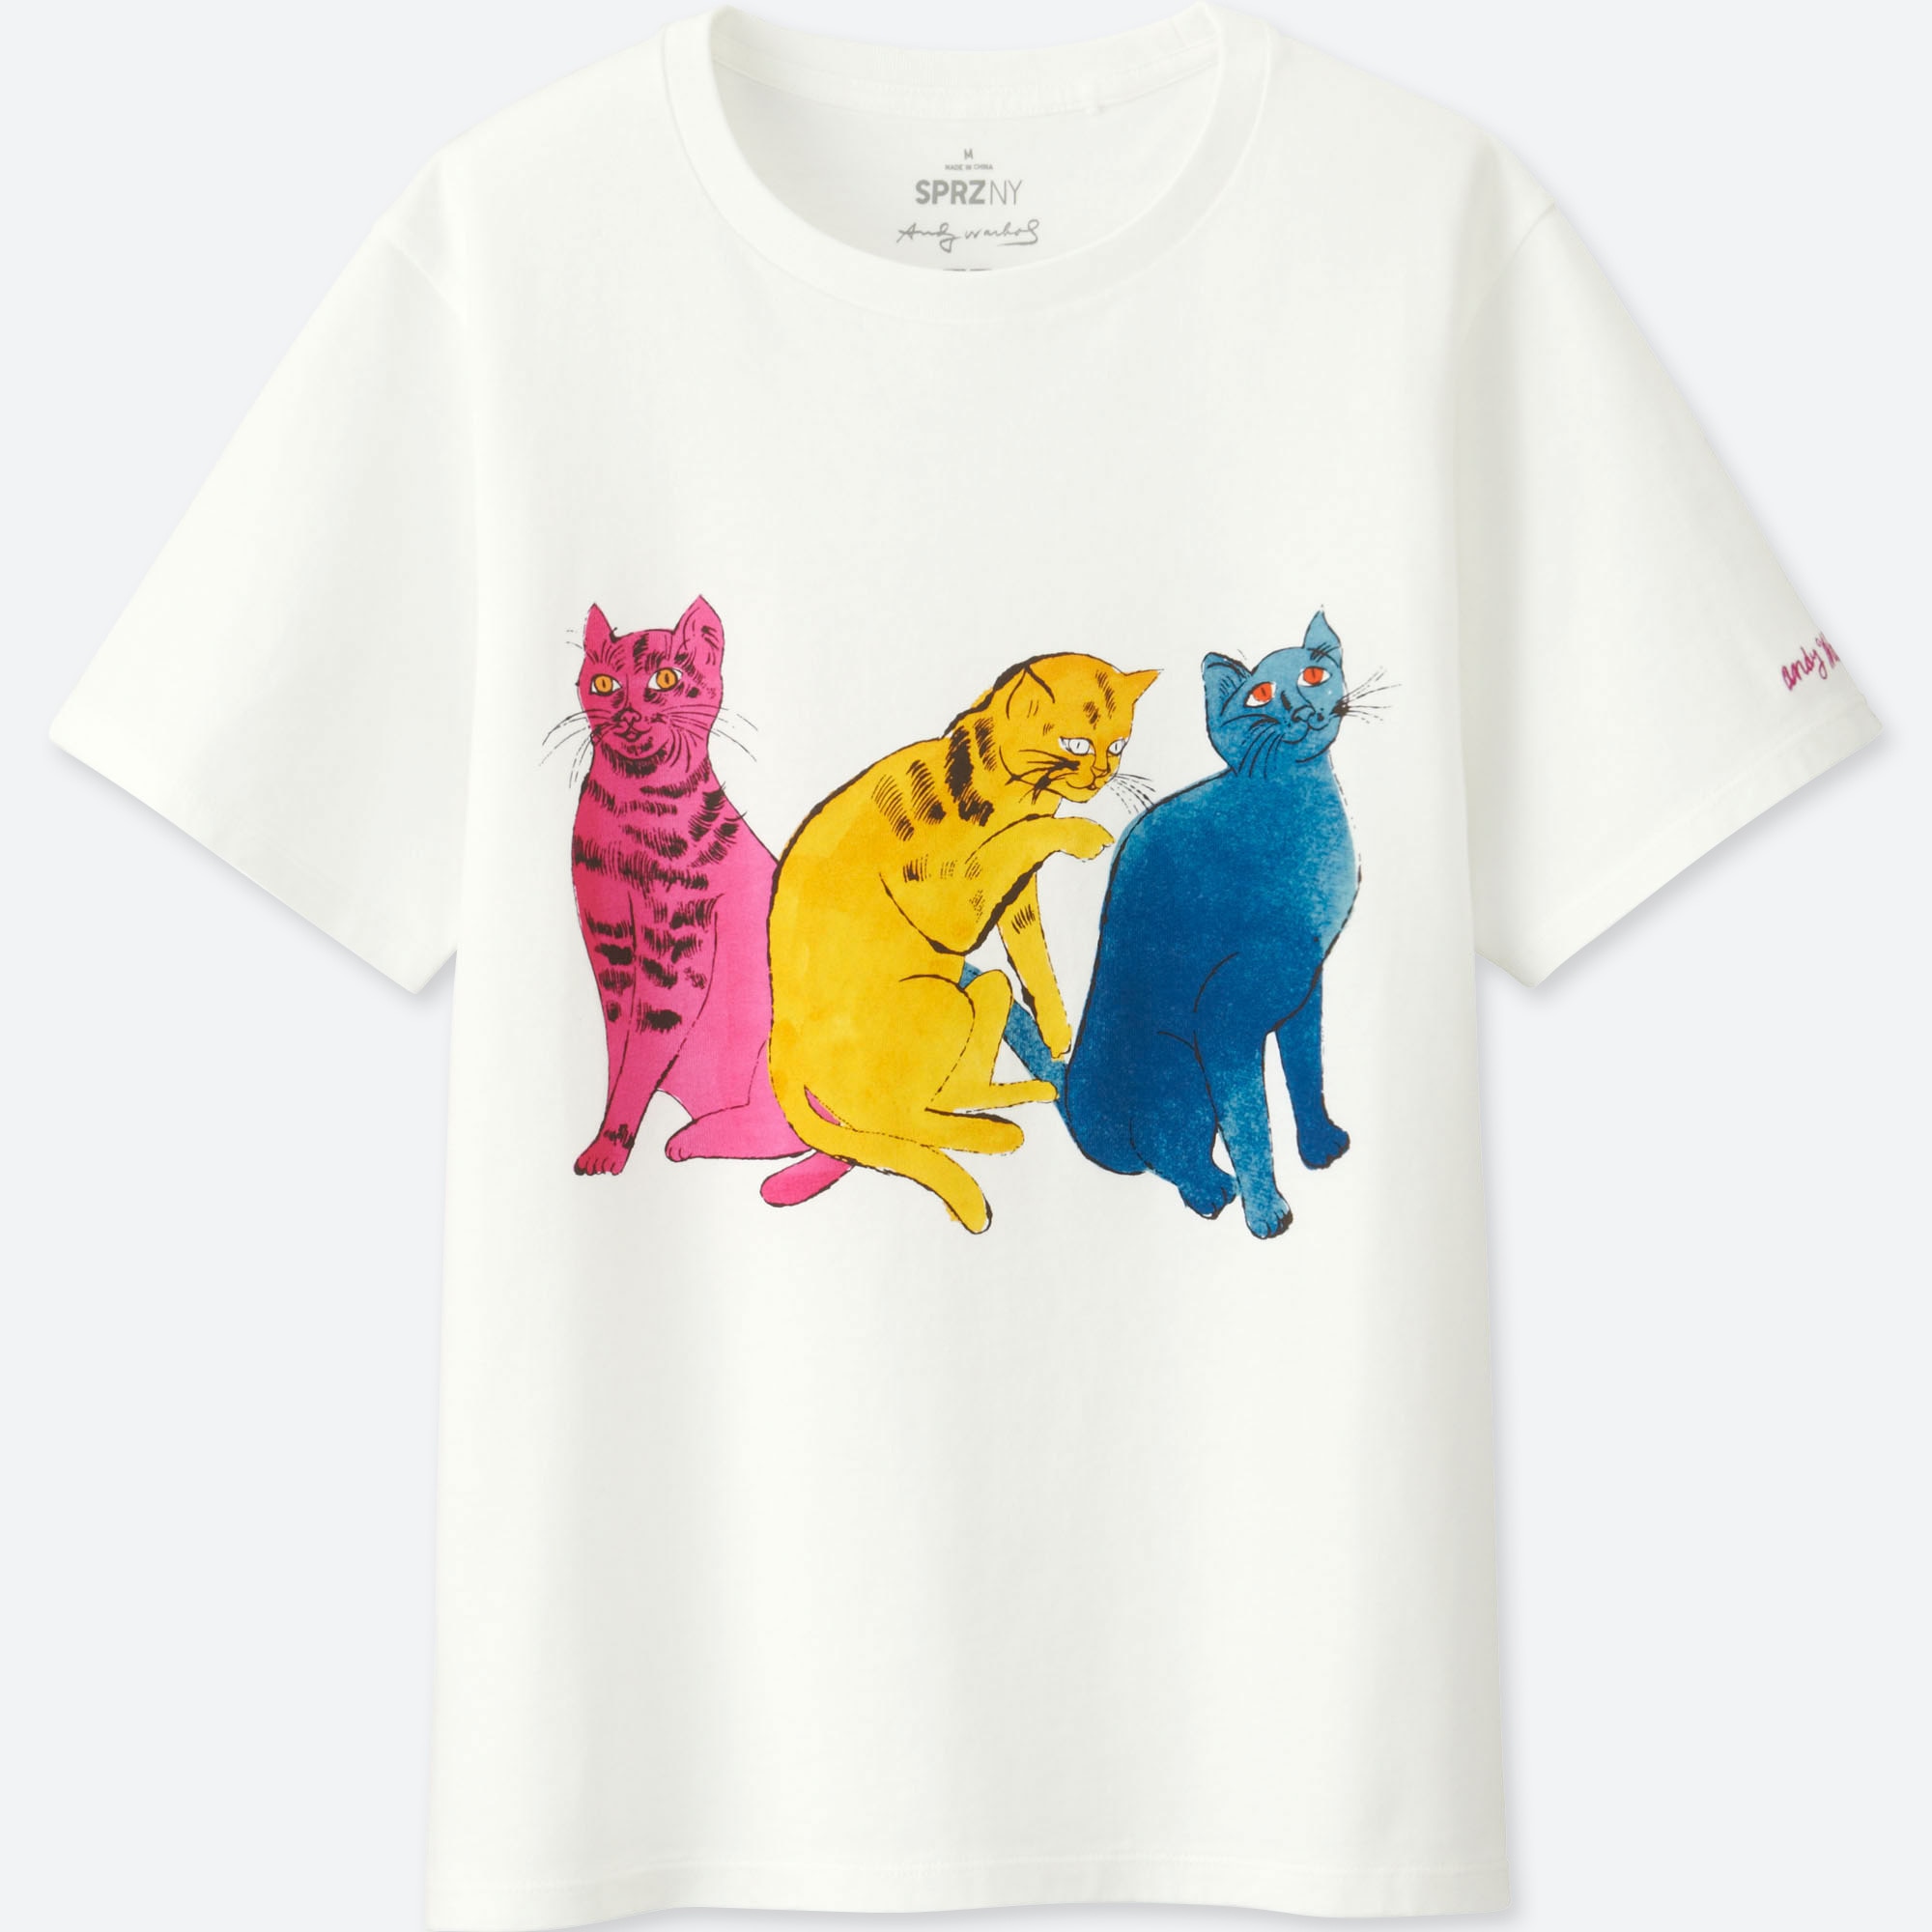 andy warhol cat shirt